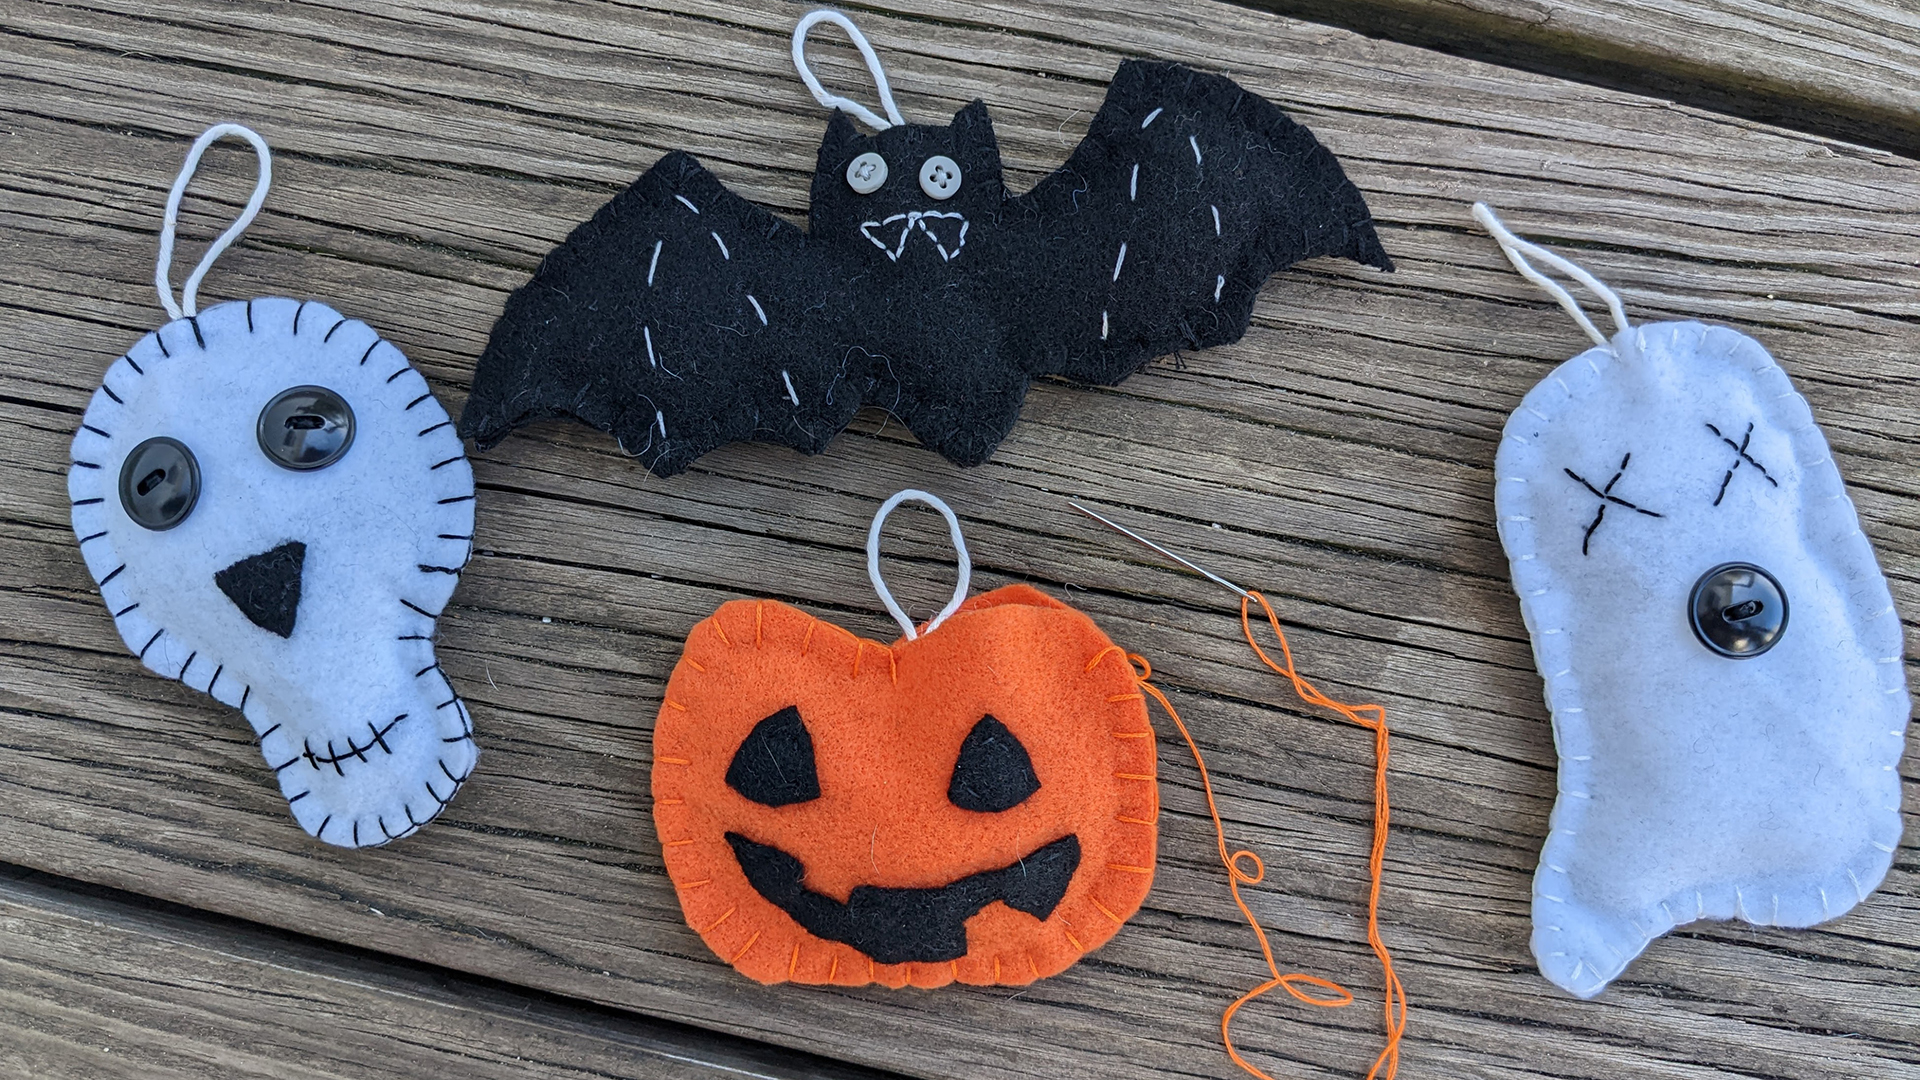 Free Sewing Pattern - Felt Halloween Decorations